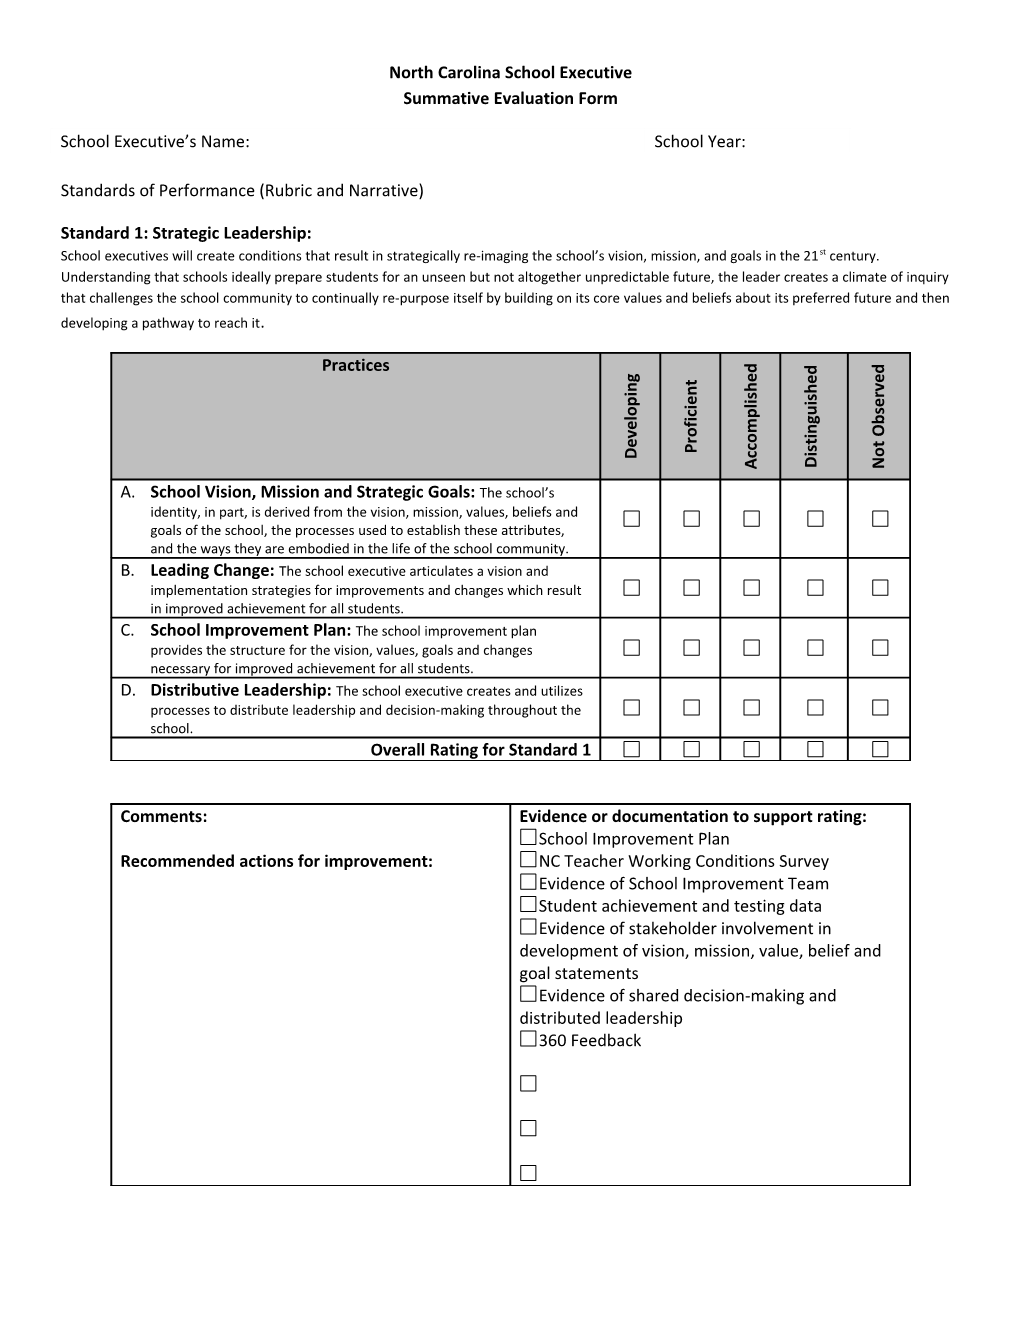 North Carolina School Executive Summative Evaluation Form